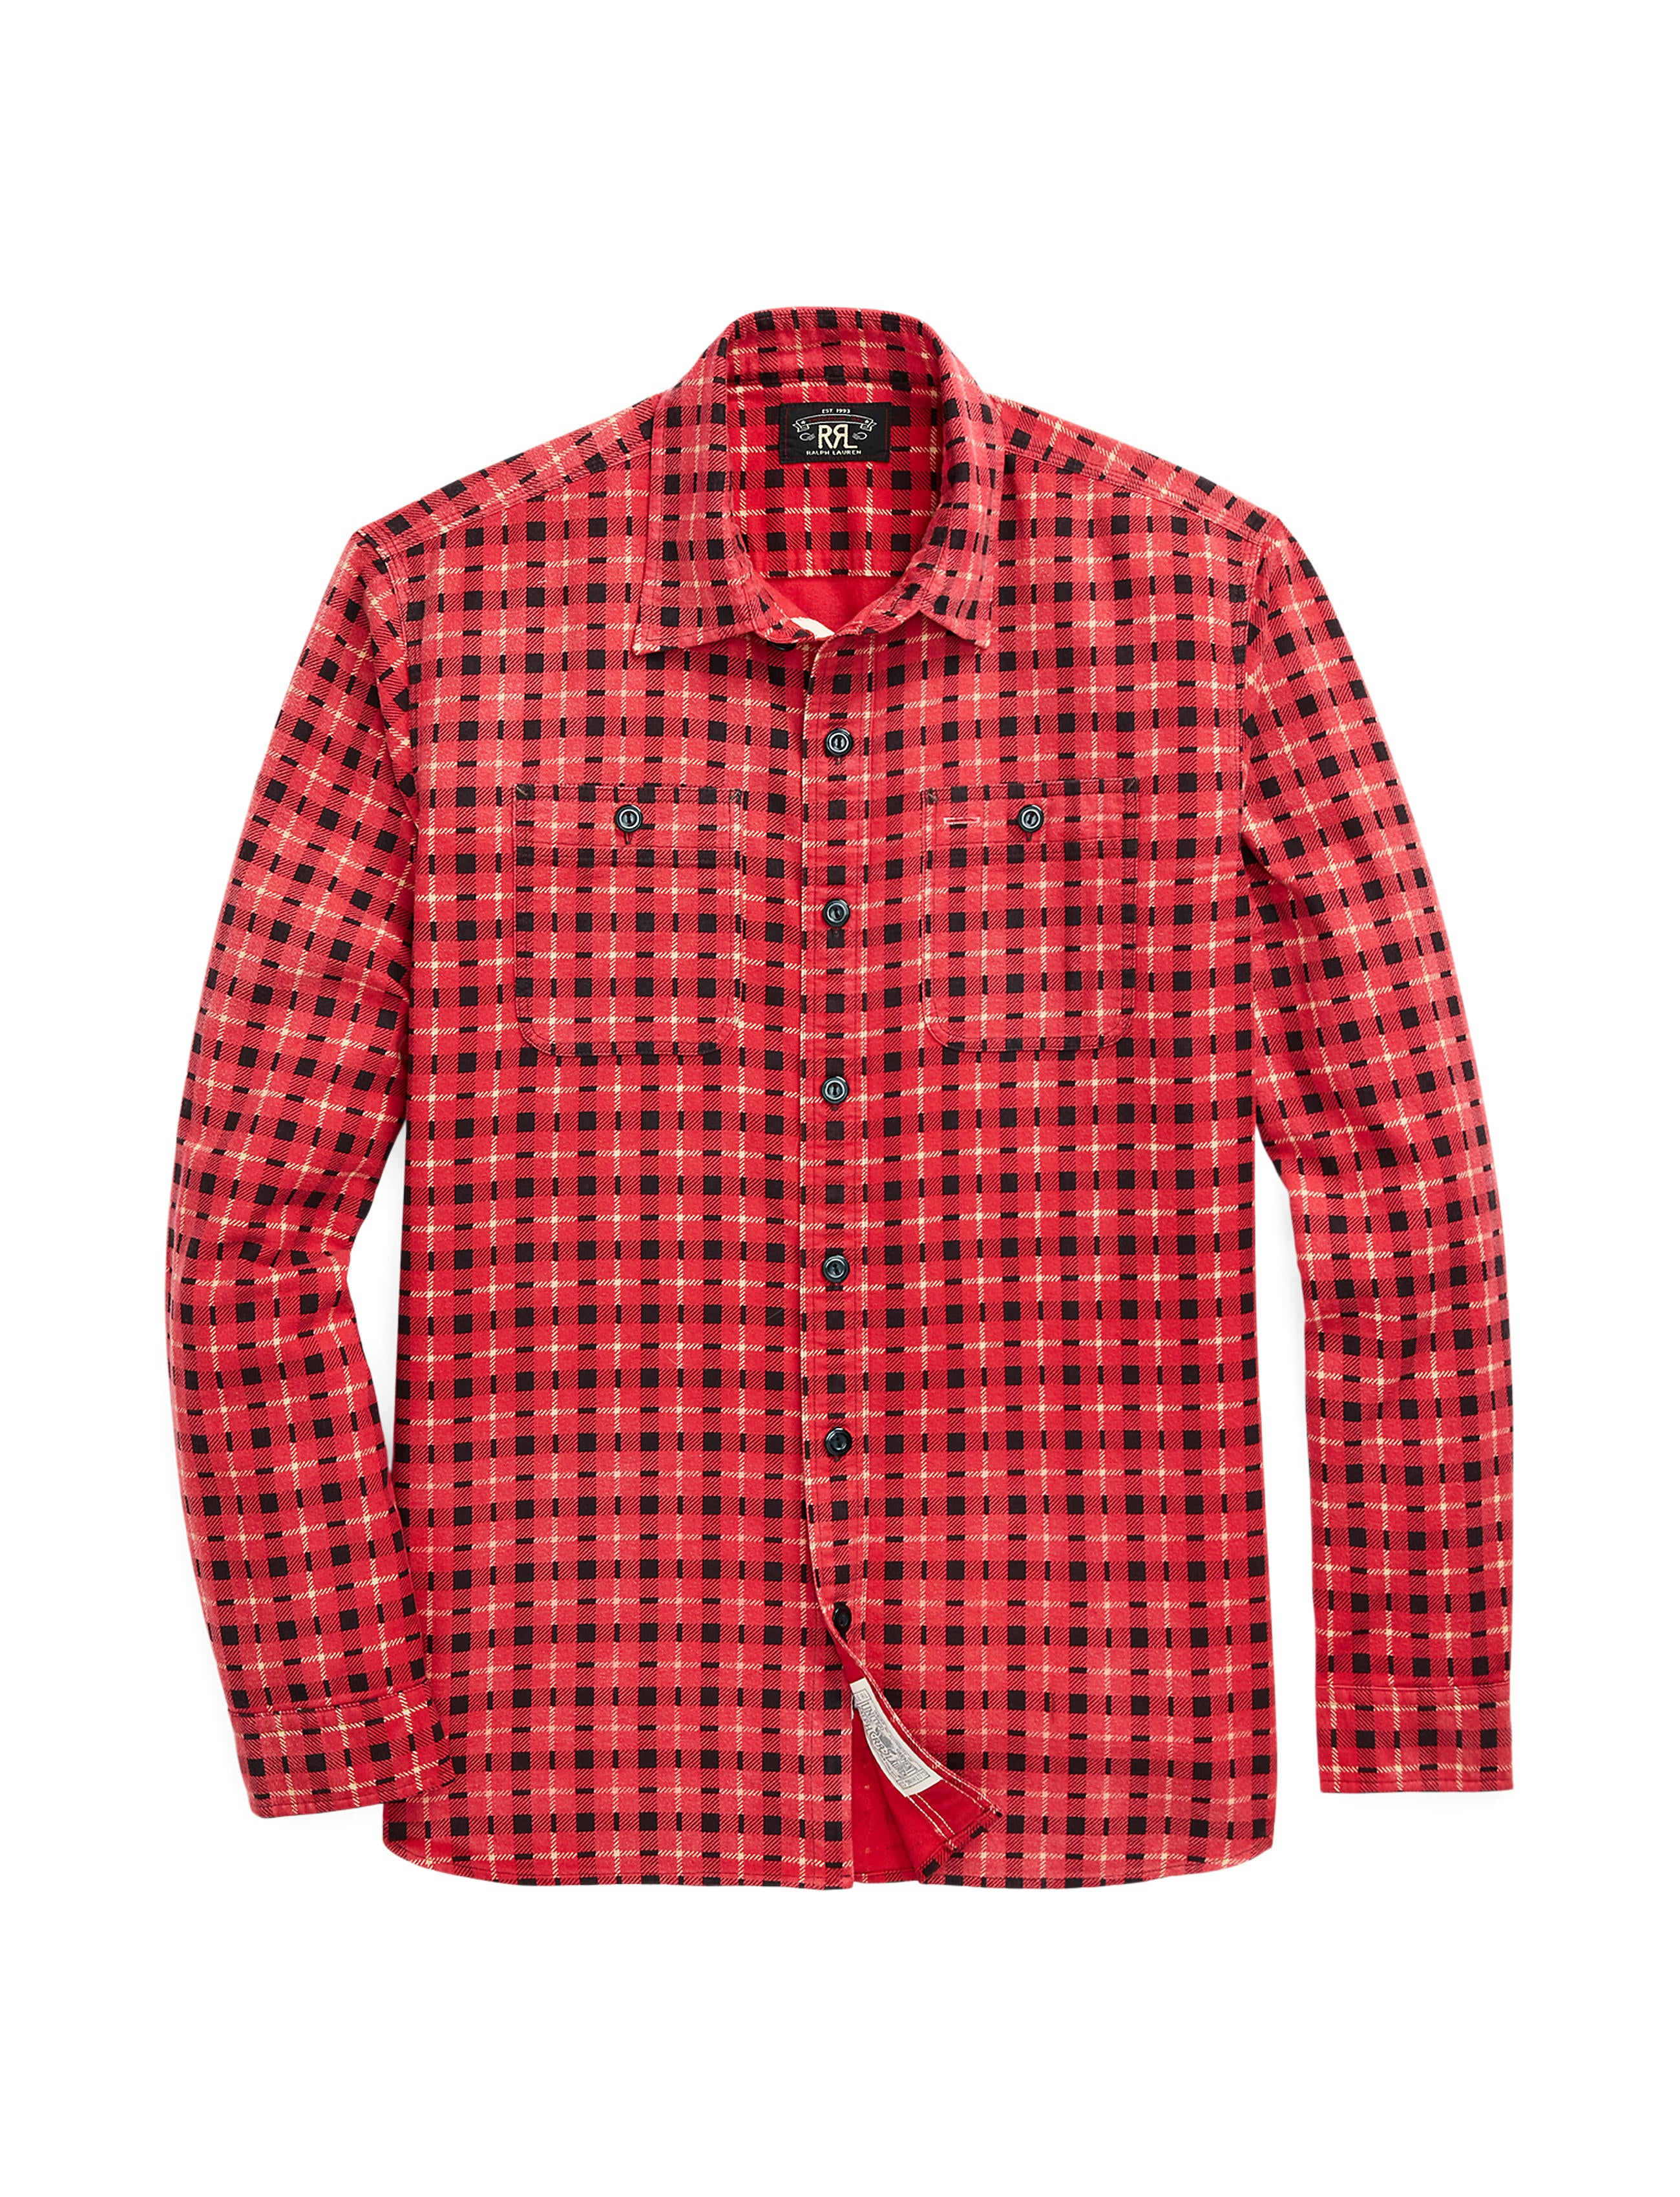 Farrell Sport Shirt / Red Multi